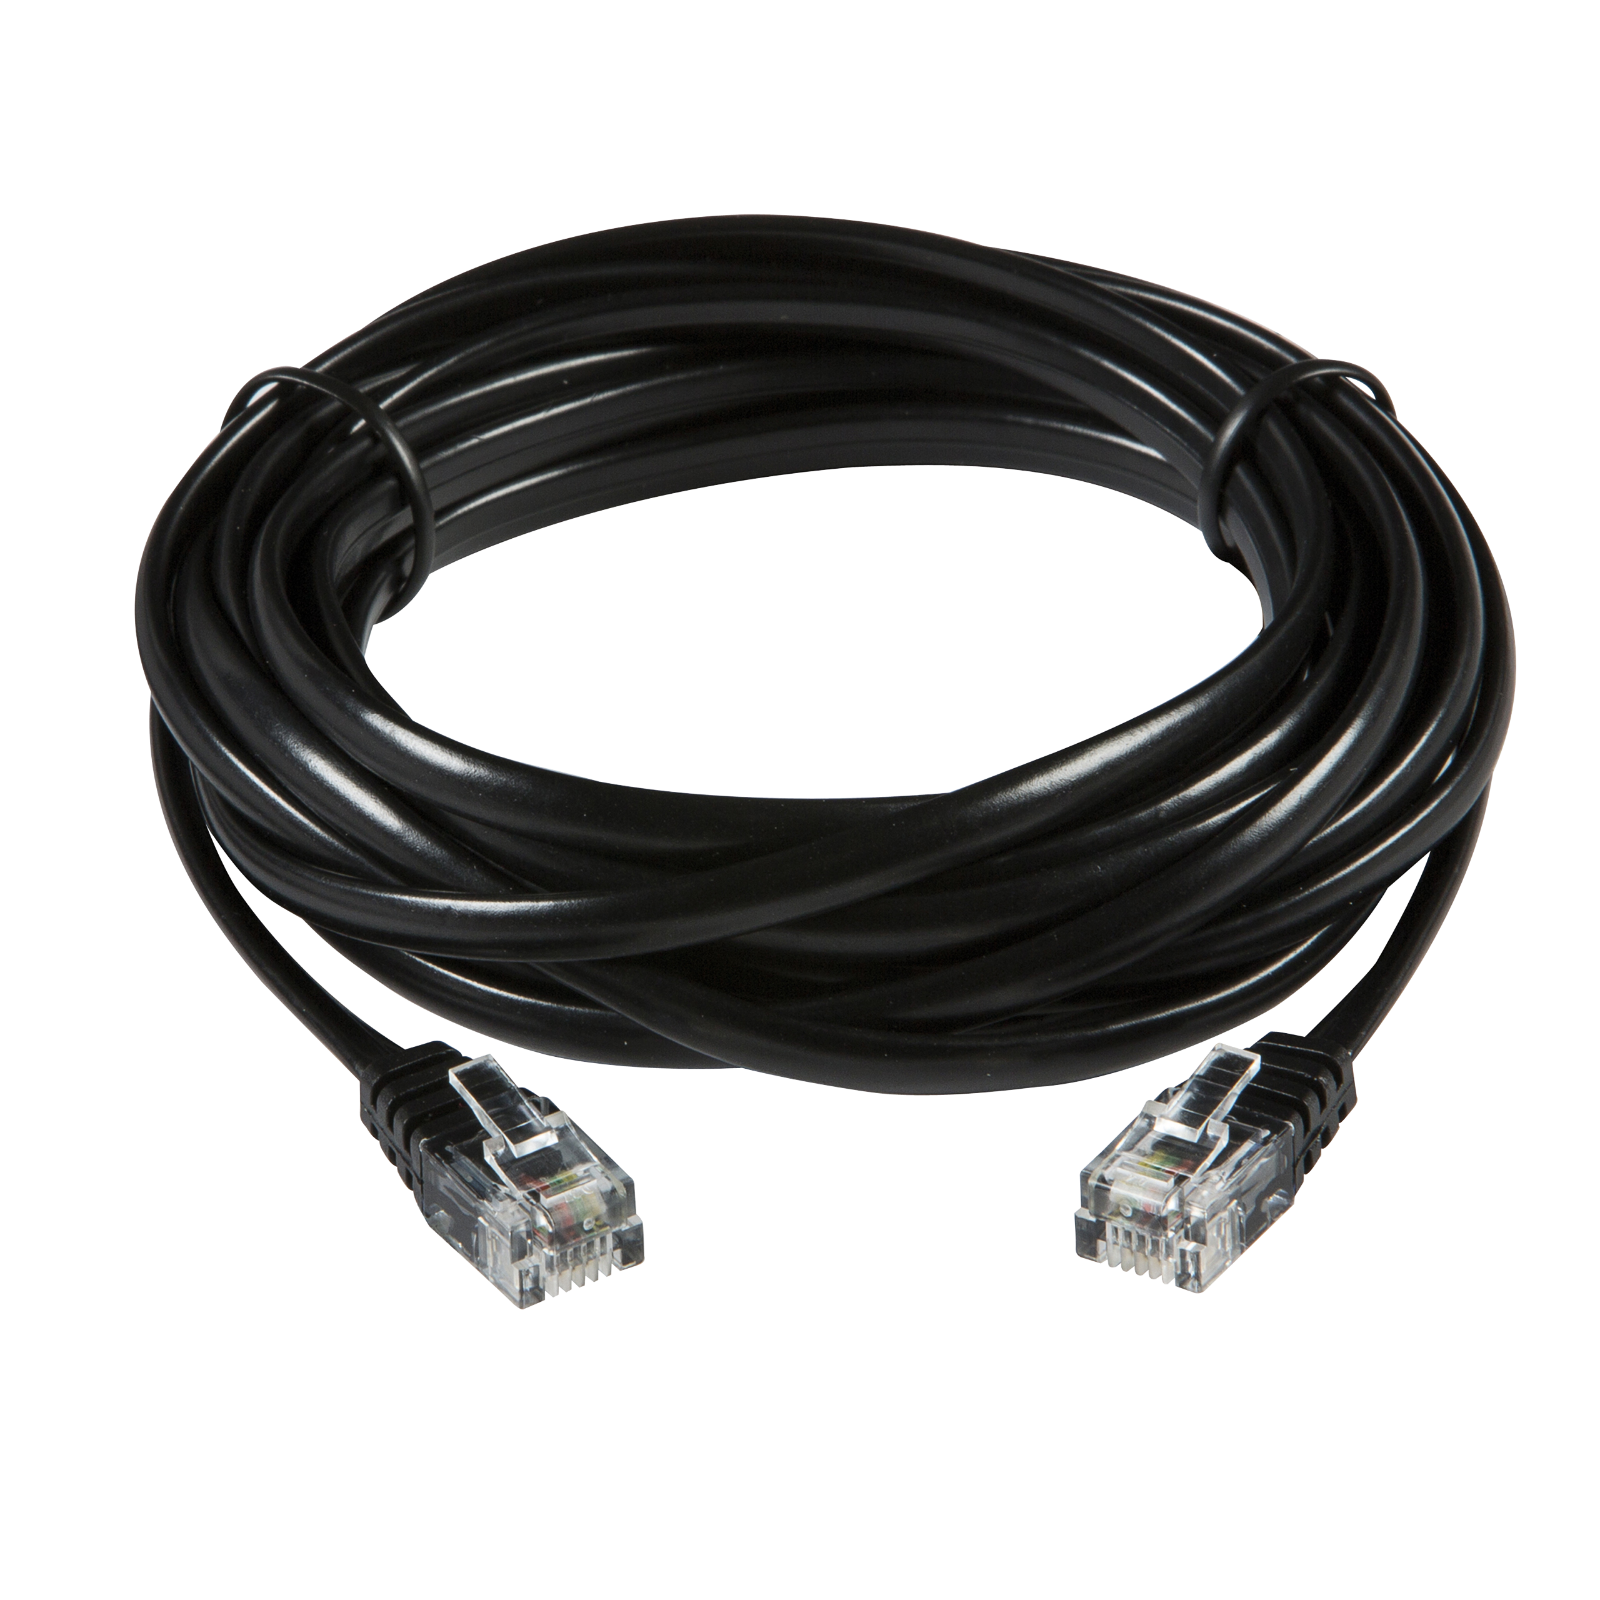 3m ADSL Modem Cable - LJ003 